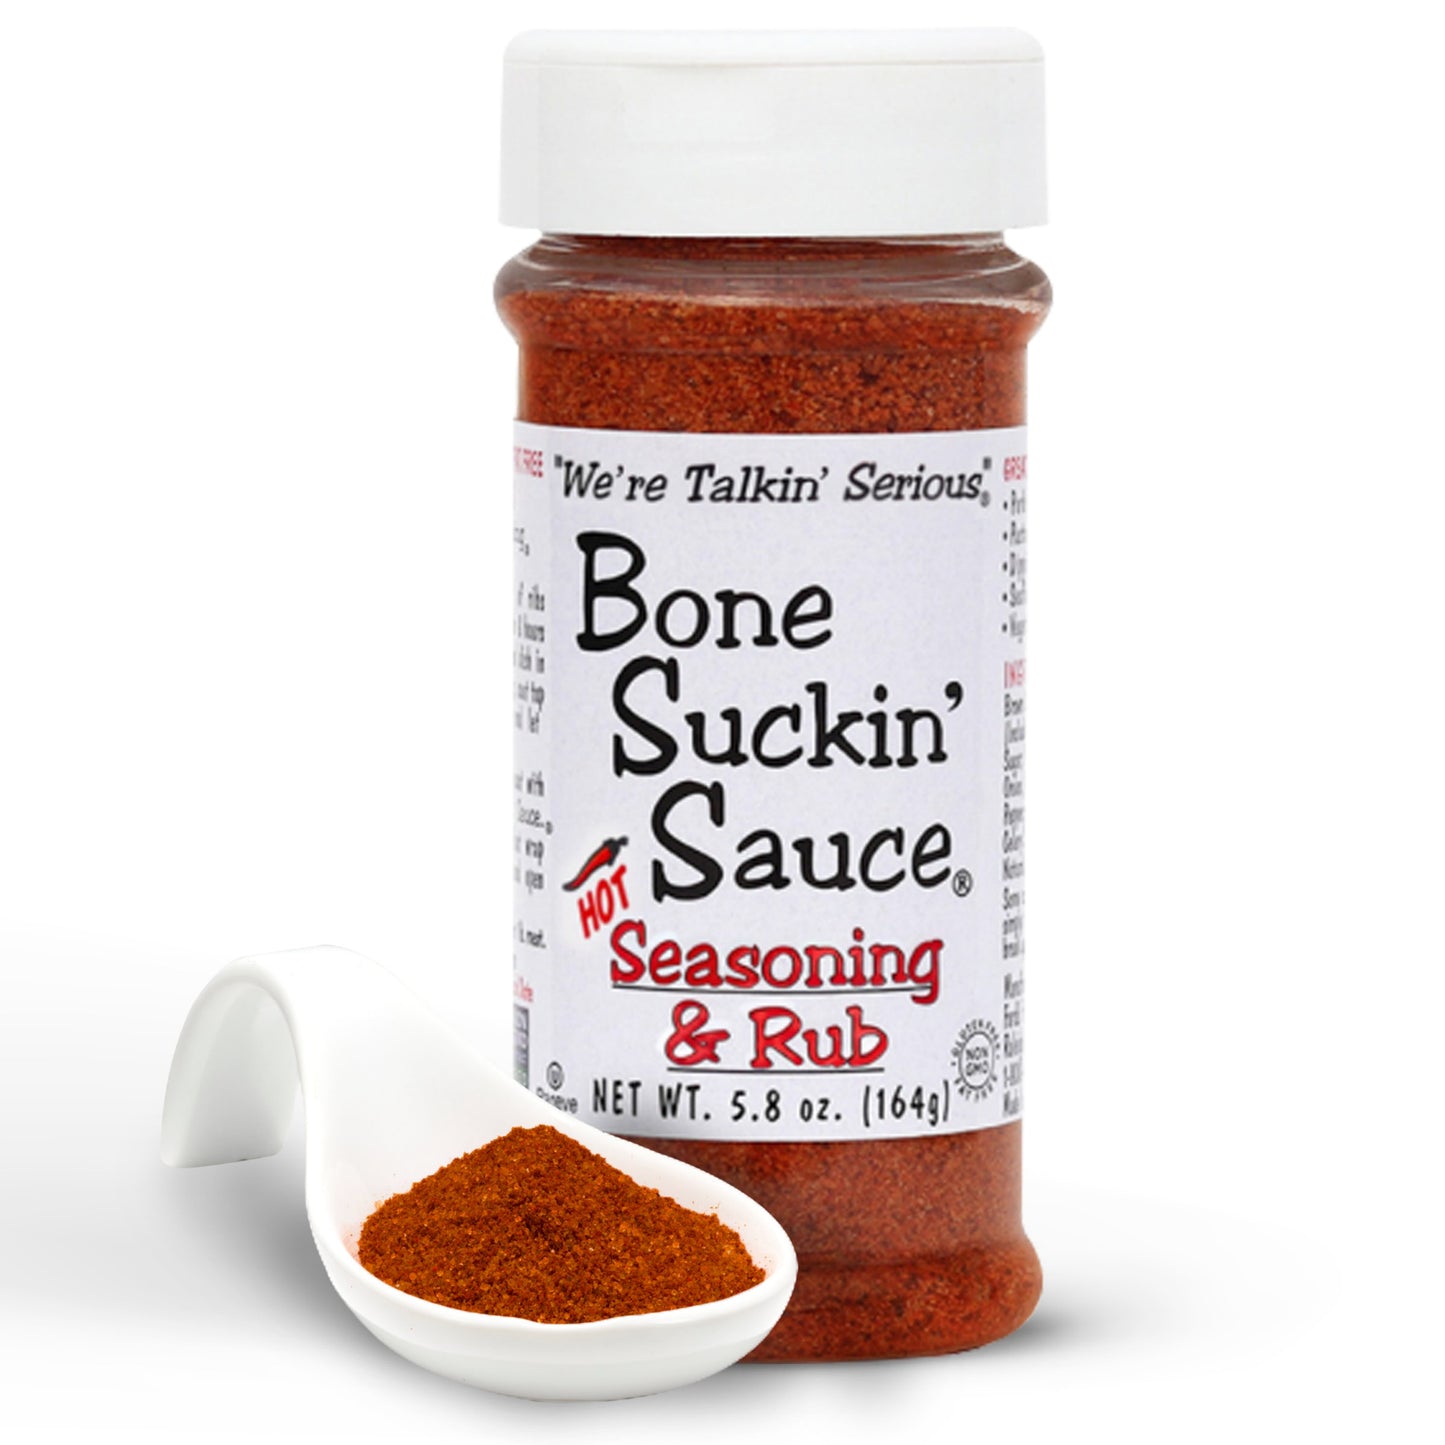 Bone Suckin' Hot Seasoning & Rub, 5.8 Oz Grilling Rubs, Dry Pork Rub, Gluten Free, Non-GMO, Kosher, Great on Ribs, Pork, Beef, Chicken, Seafood, Pasta, Vegetables & Even Popcorn! No Msg!